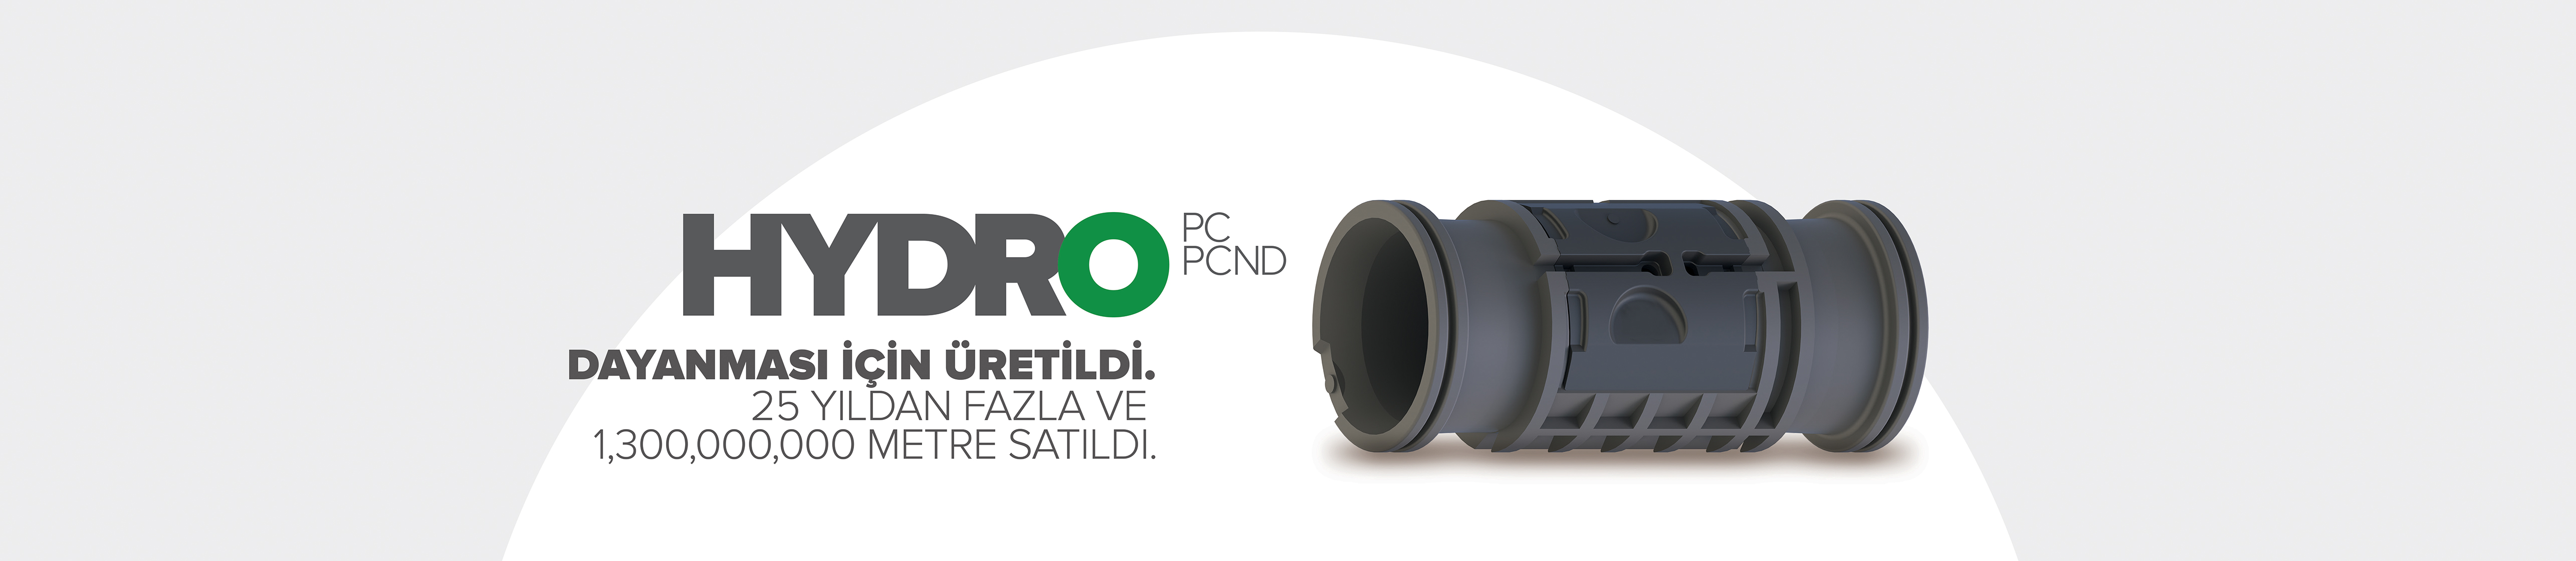 Hydro PC/PCND Damla Sulama Borusu